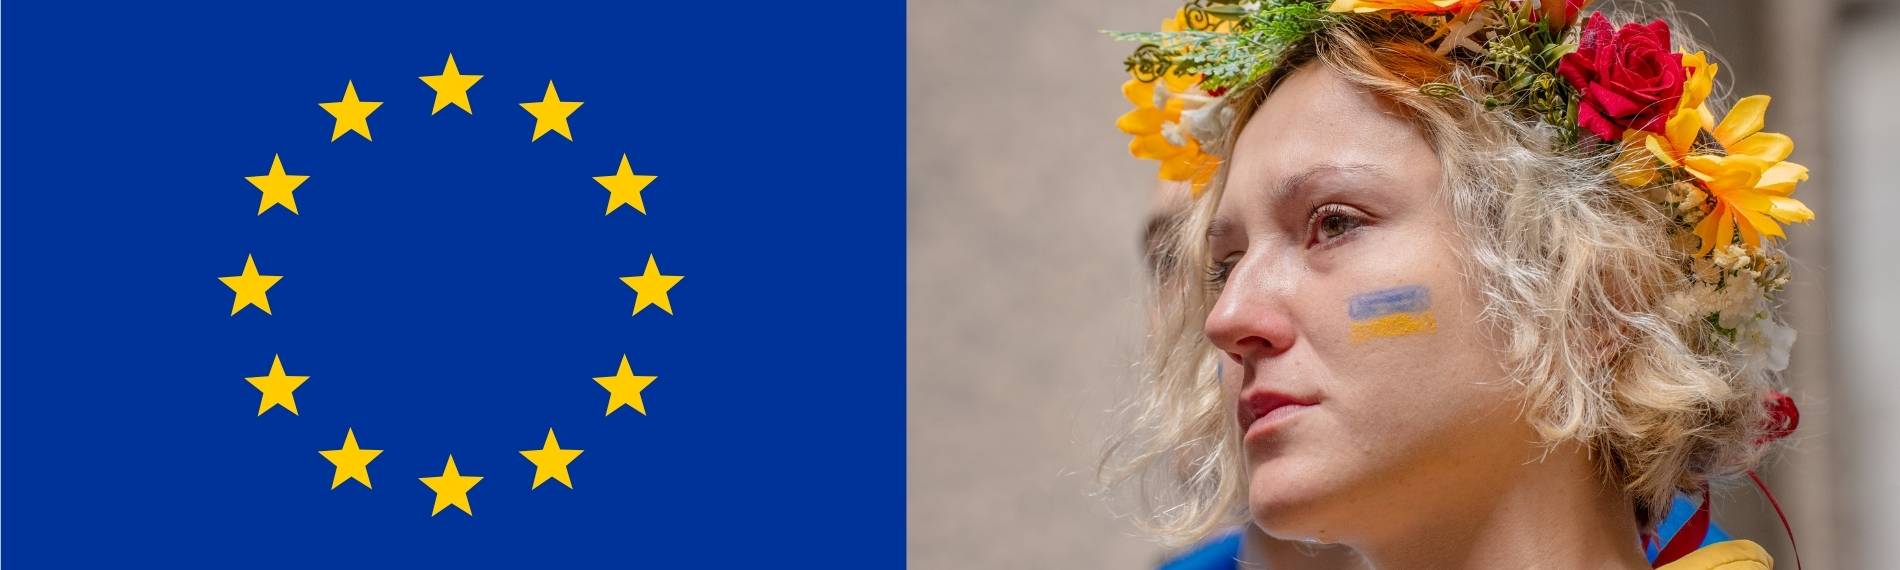 Eurpoa Euromaidan Ukraine Kiew